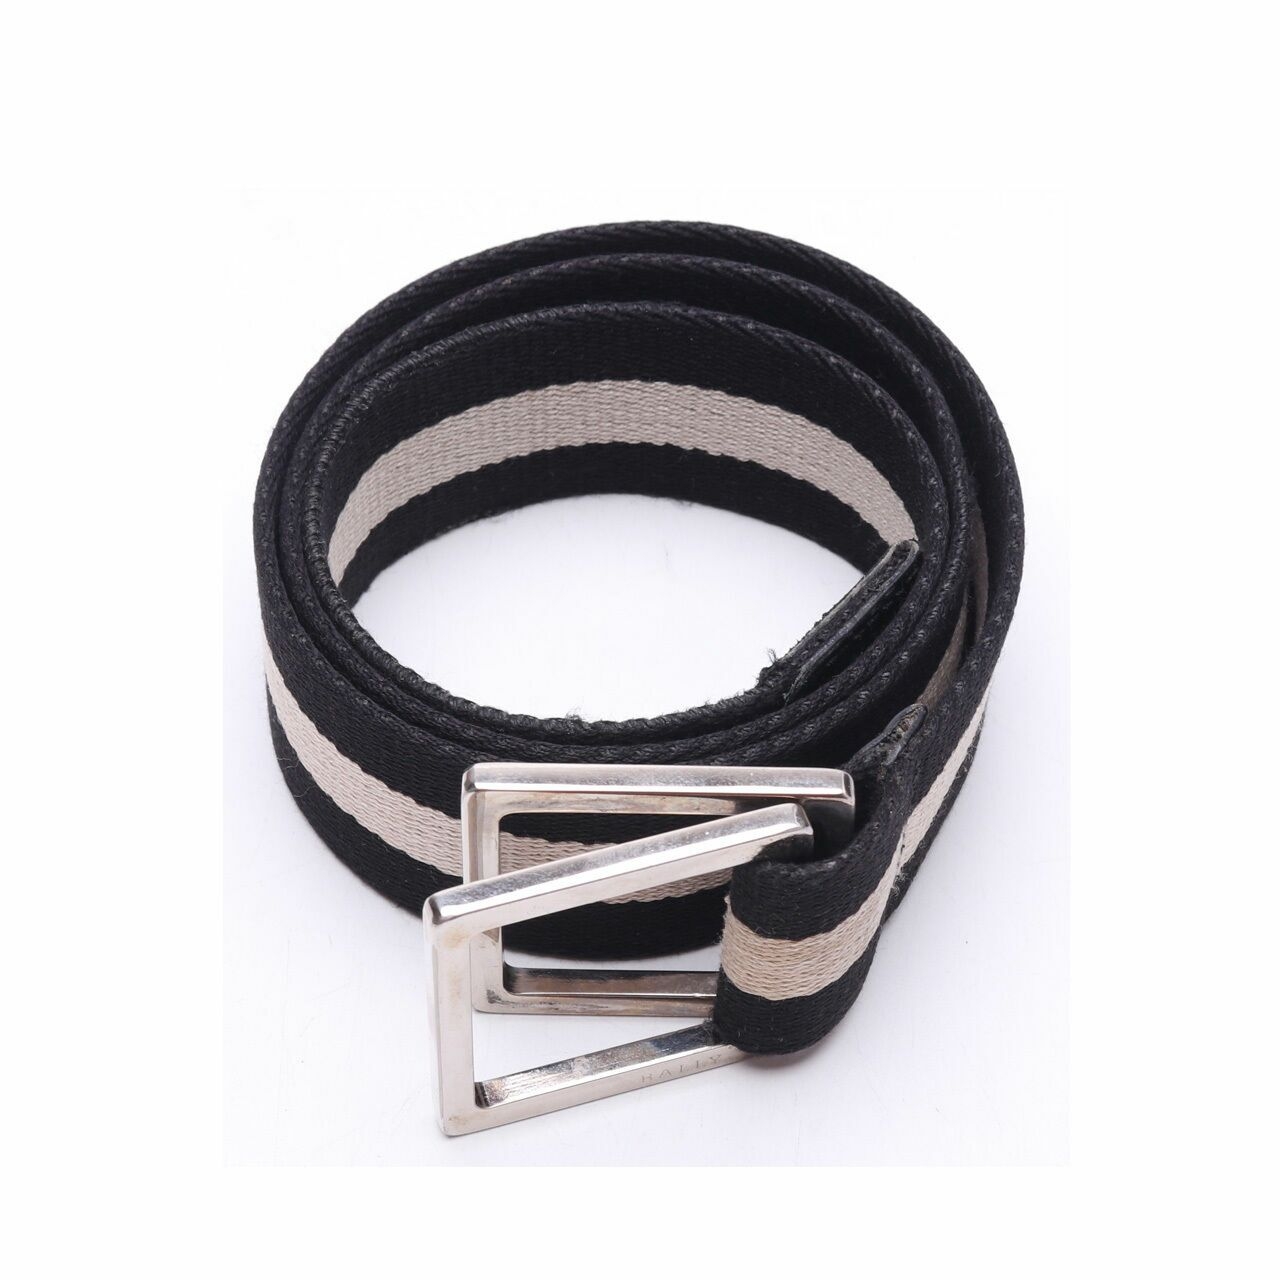 Bally Caleiro Stripe Black/Cream Belt